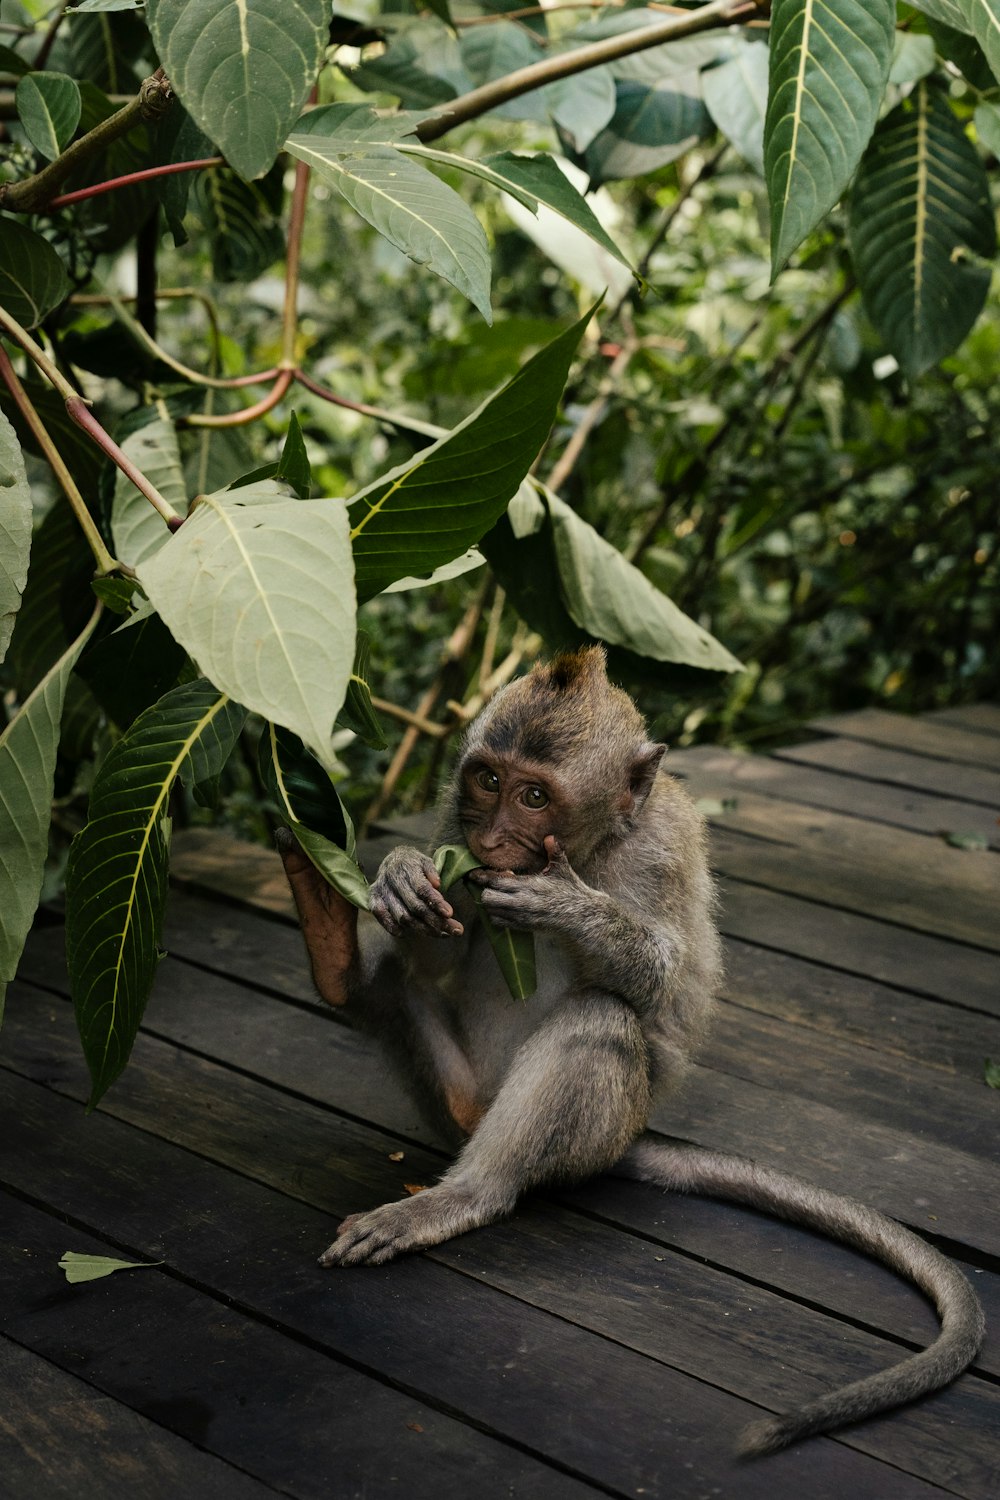 a monkey sitting on a wooden deck eating a leaf